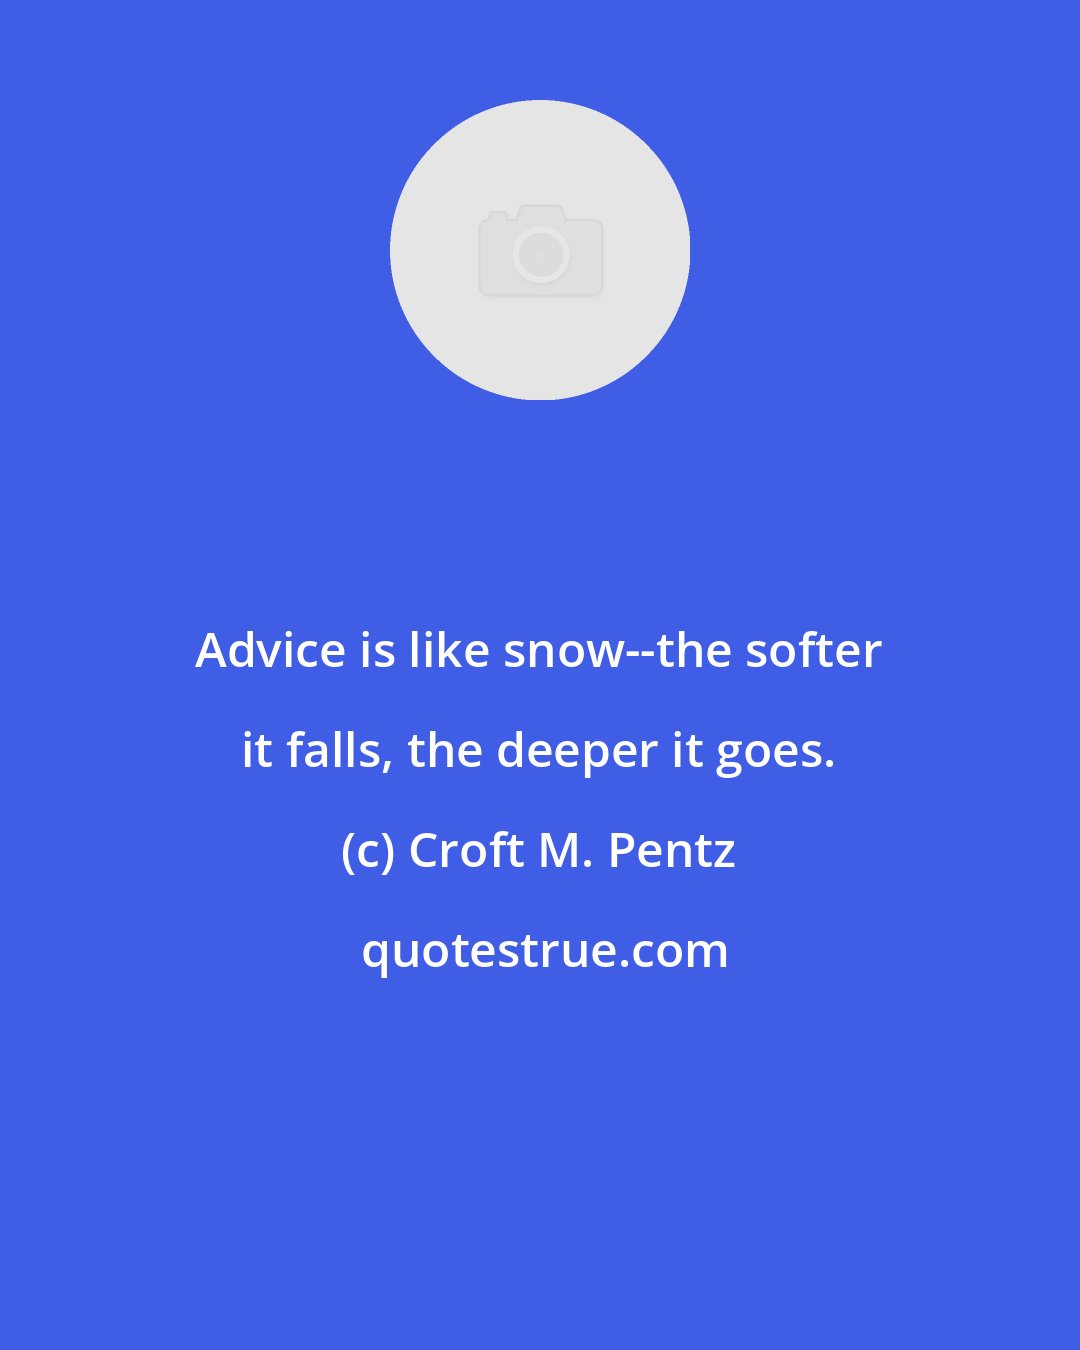 Croft M. Pentz: Advice is like snow--the softer it falls, the deeper it goes.